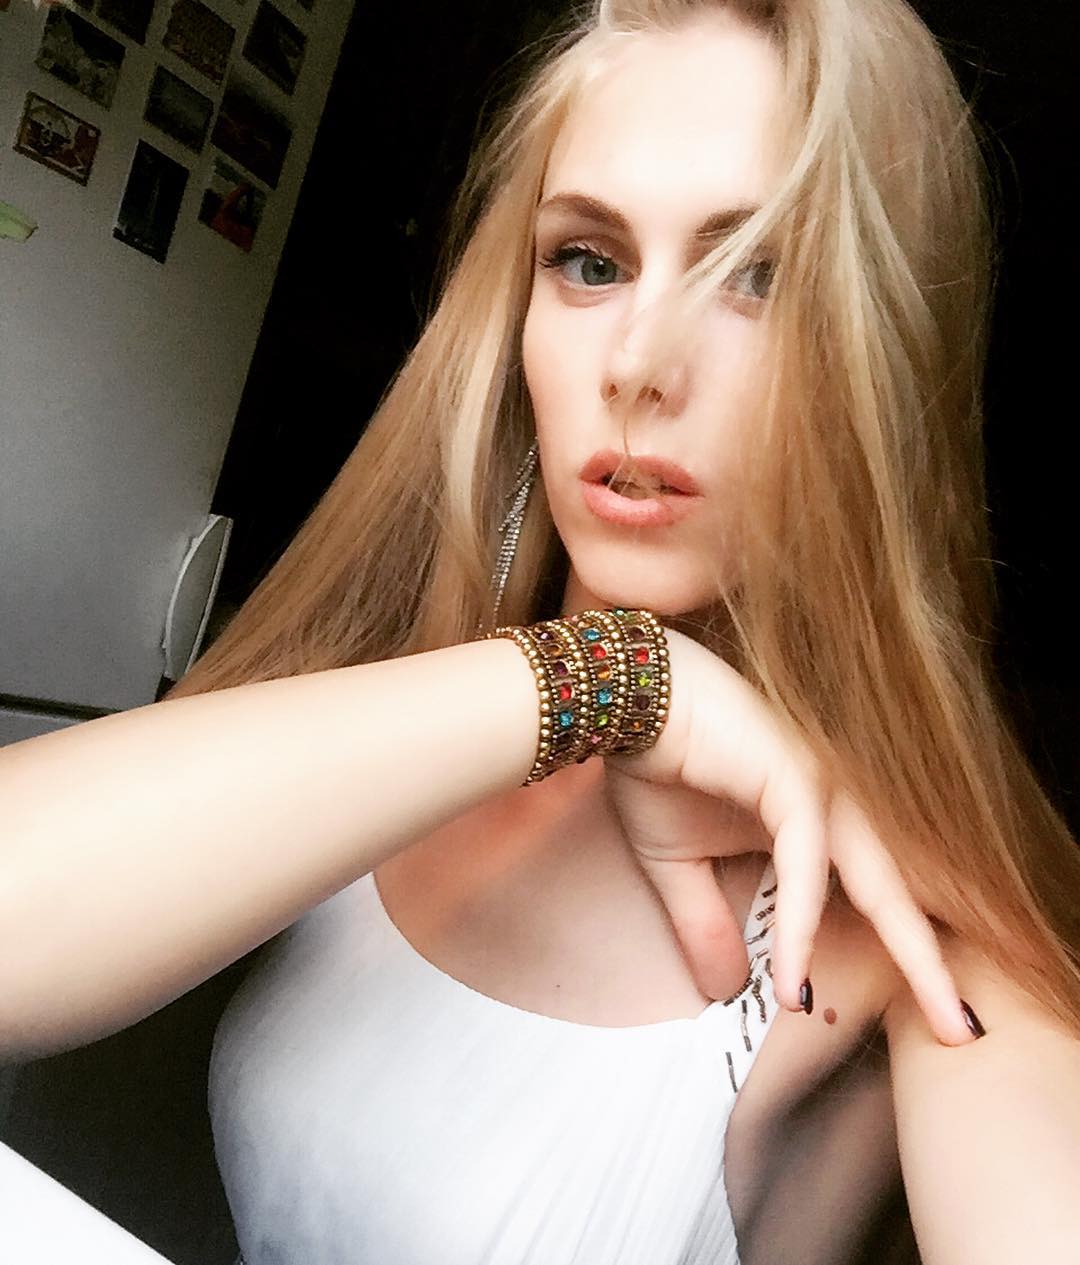 Kira Sadovaya gorgeous young Russian mtf transgender woman Instagram